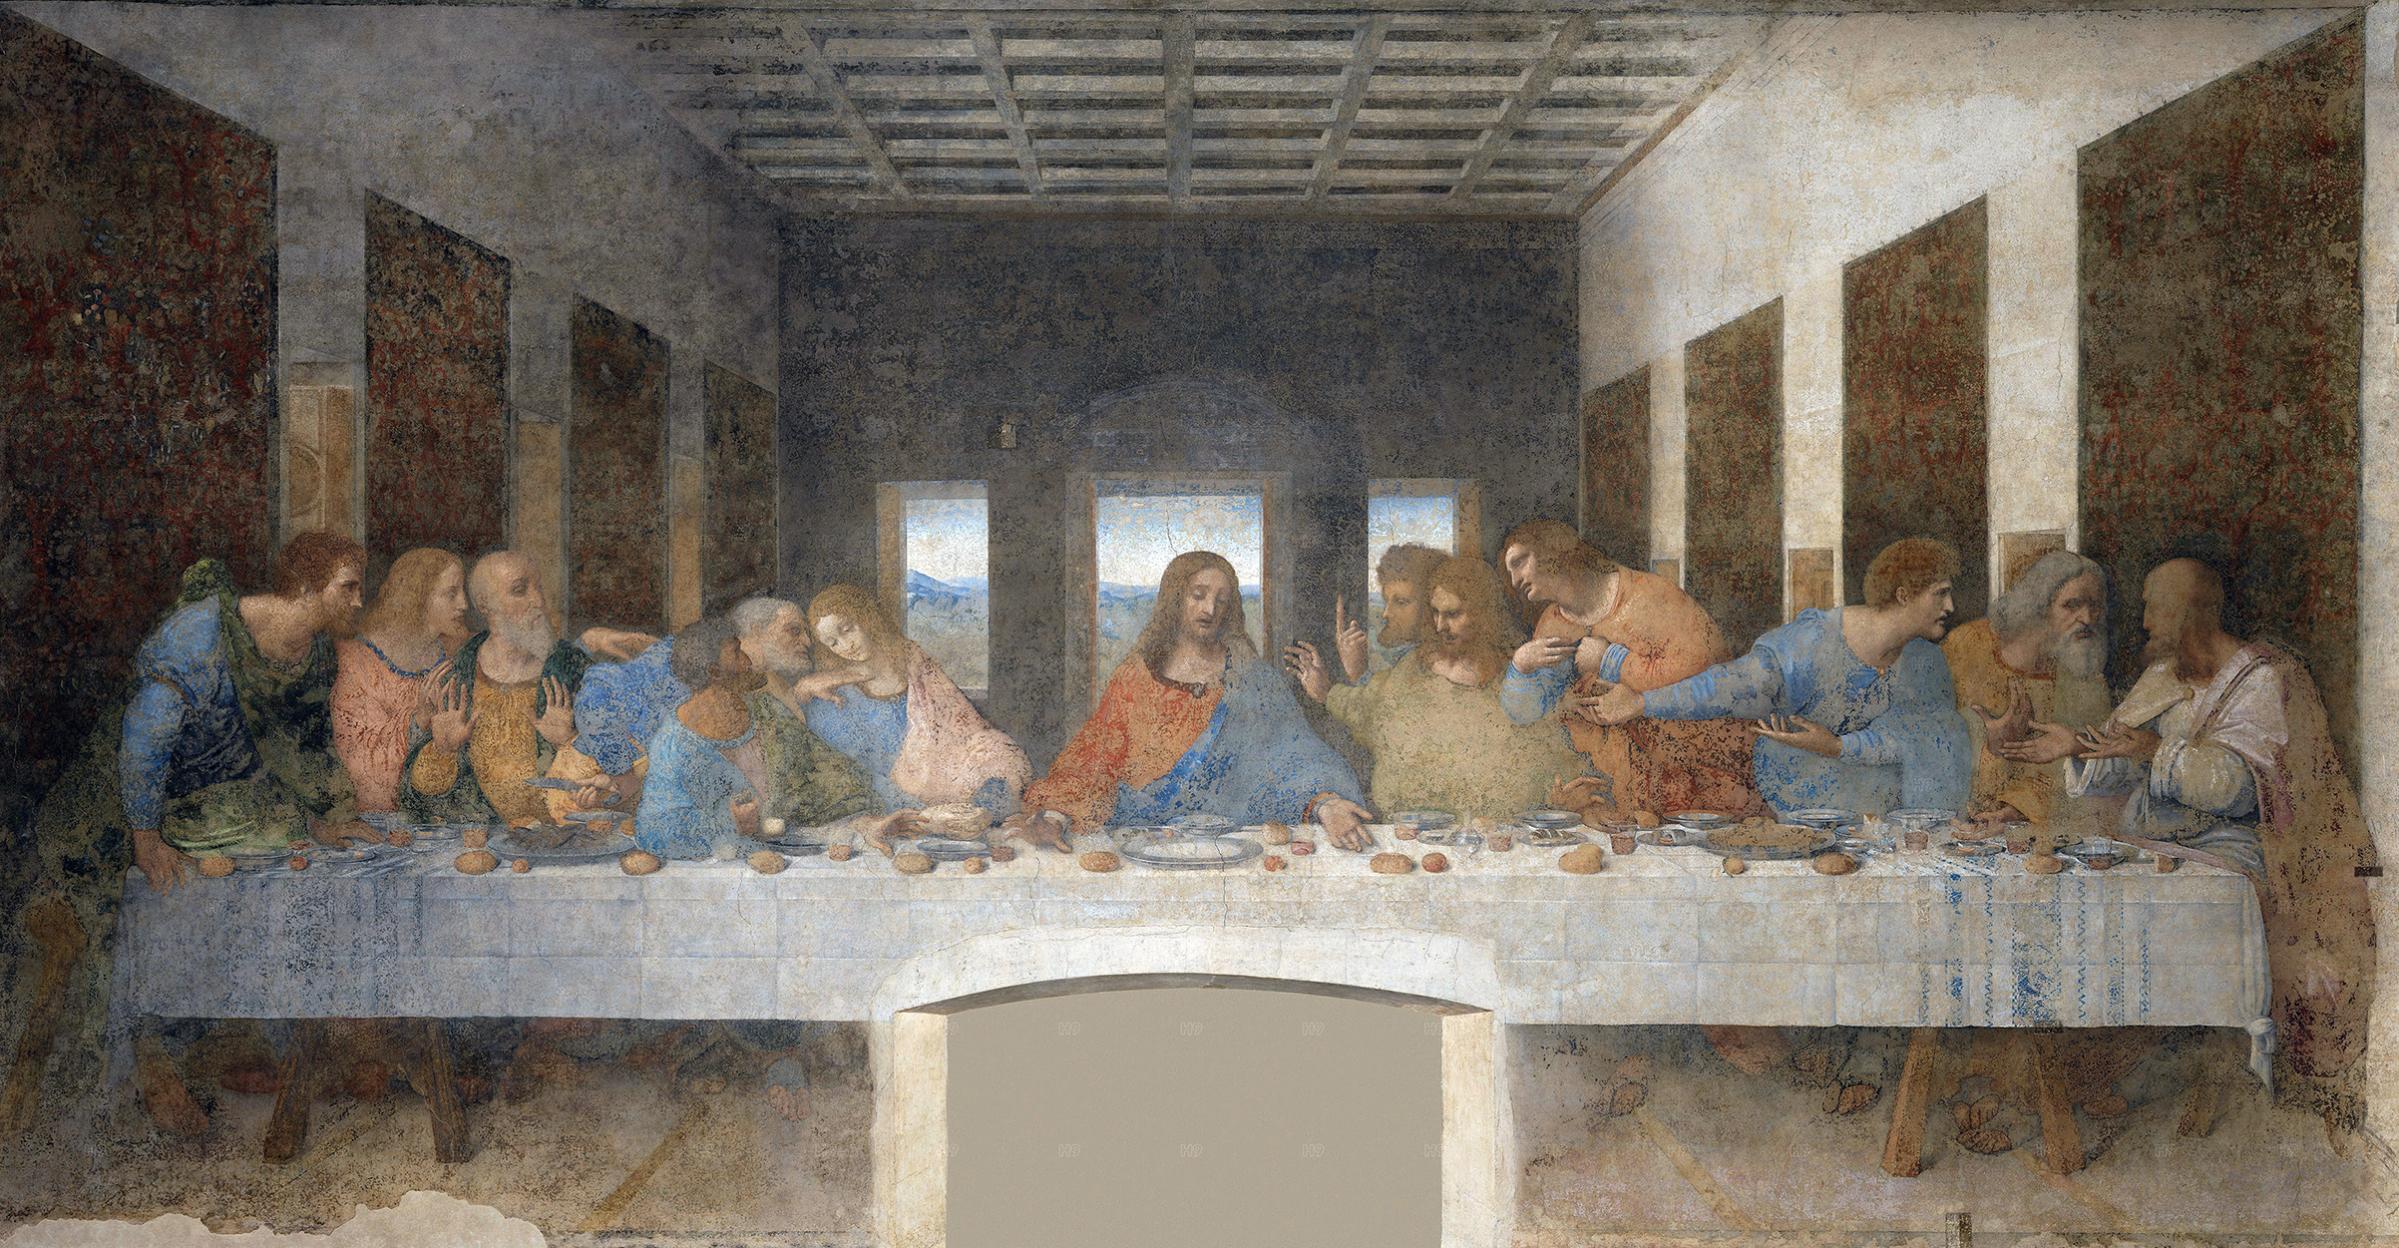 Leonardo da Vinci started painting his famous Last Supper mural in Milan in 1495